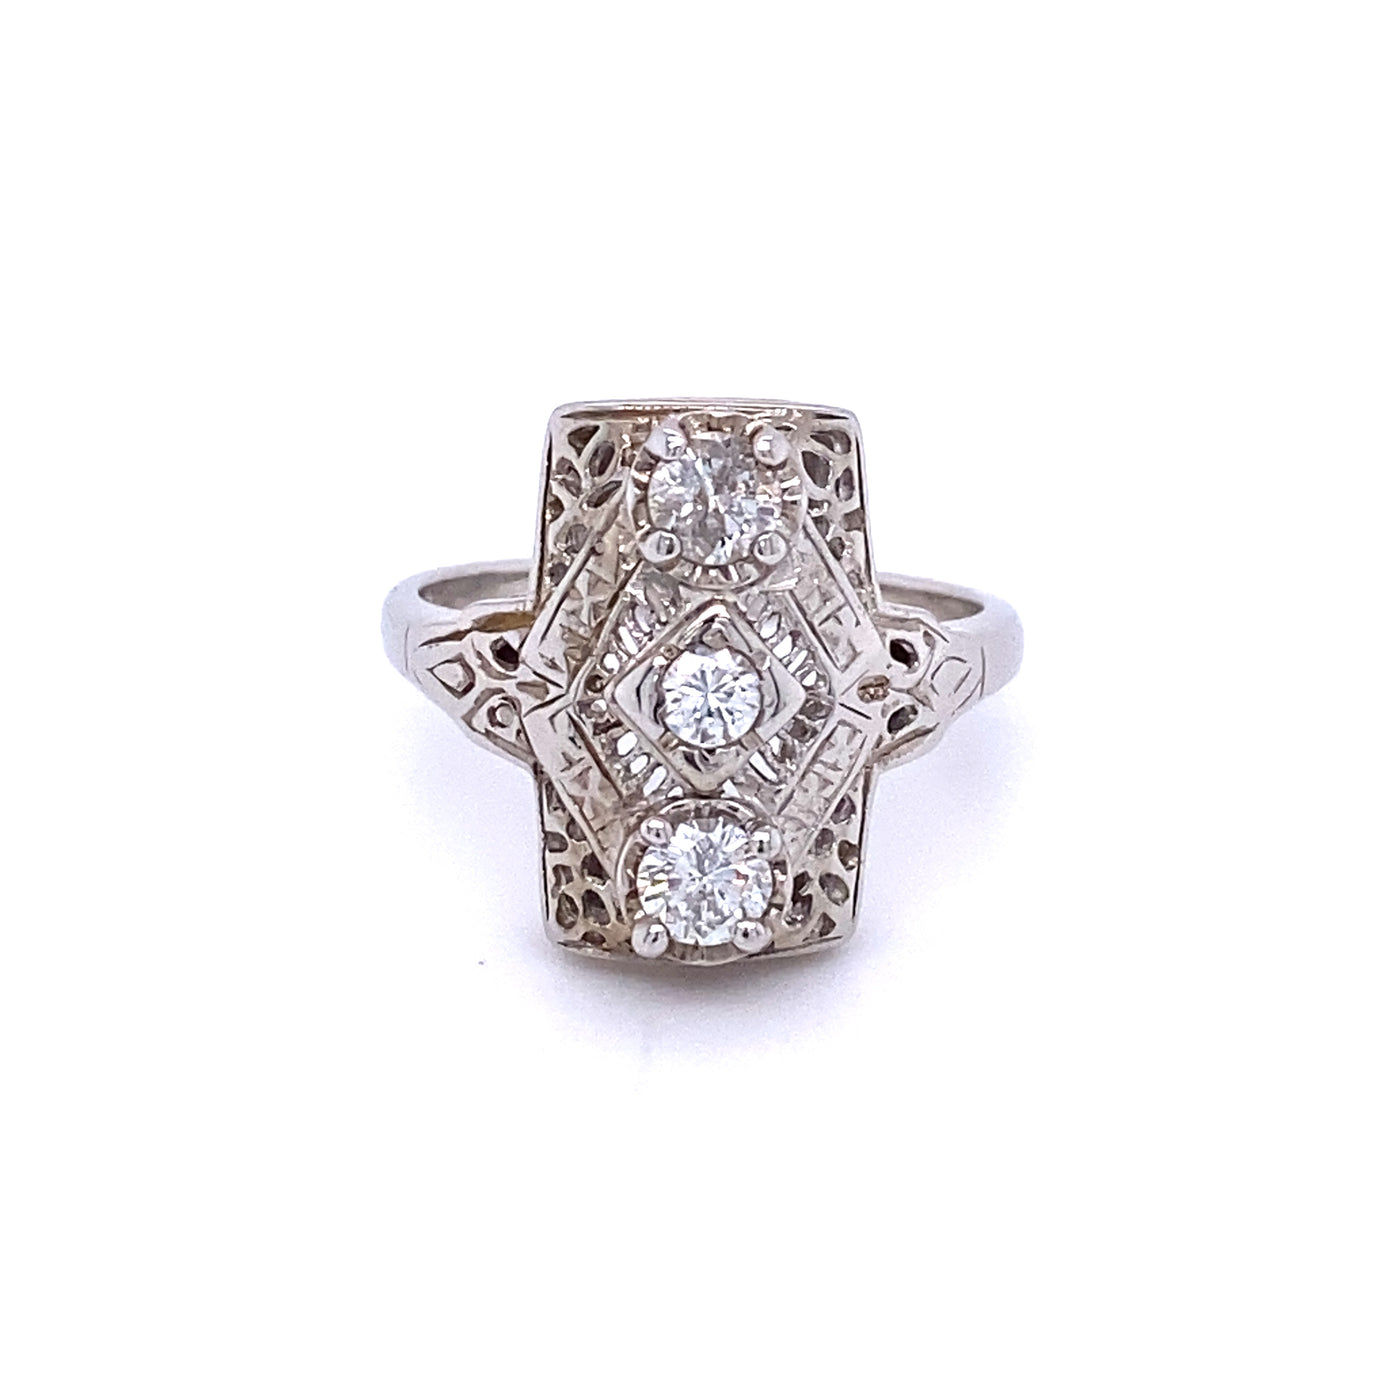 Rectangular Art Deco Filigree Diamond Ring